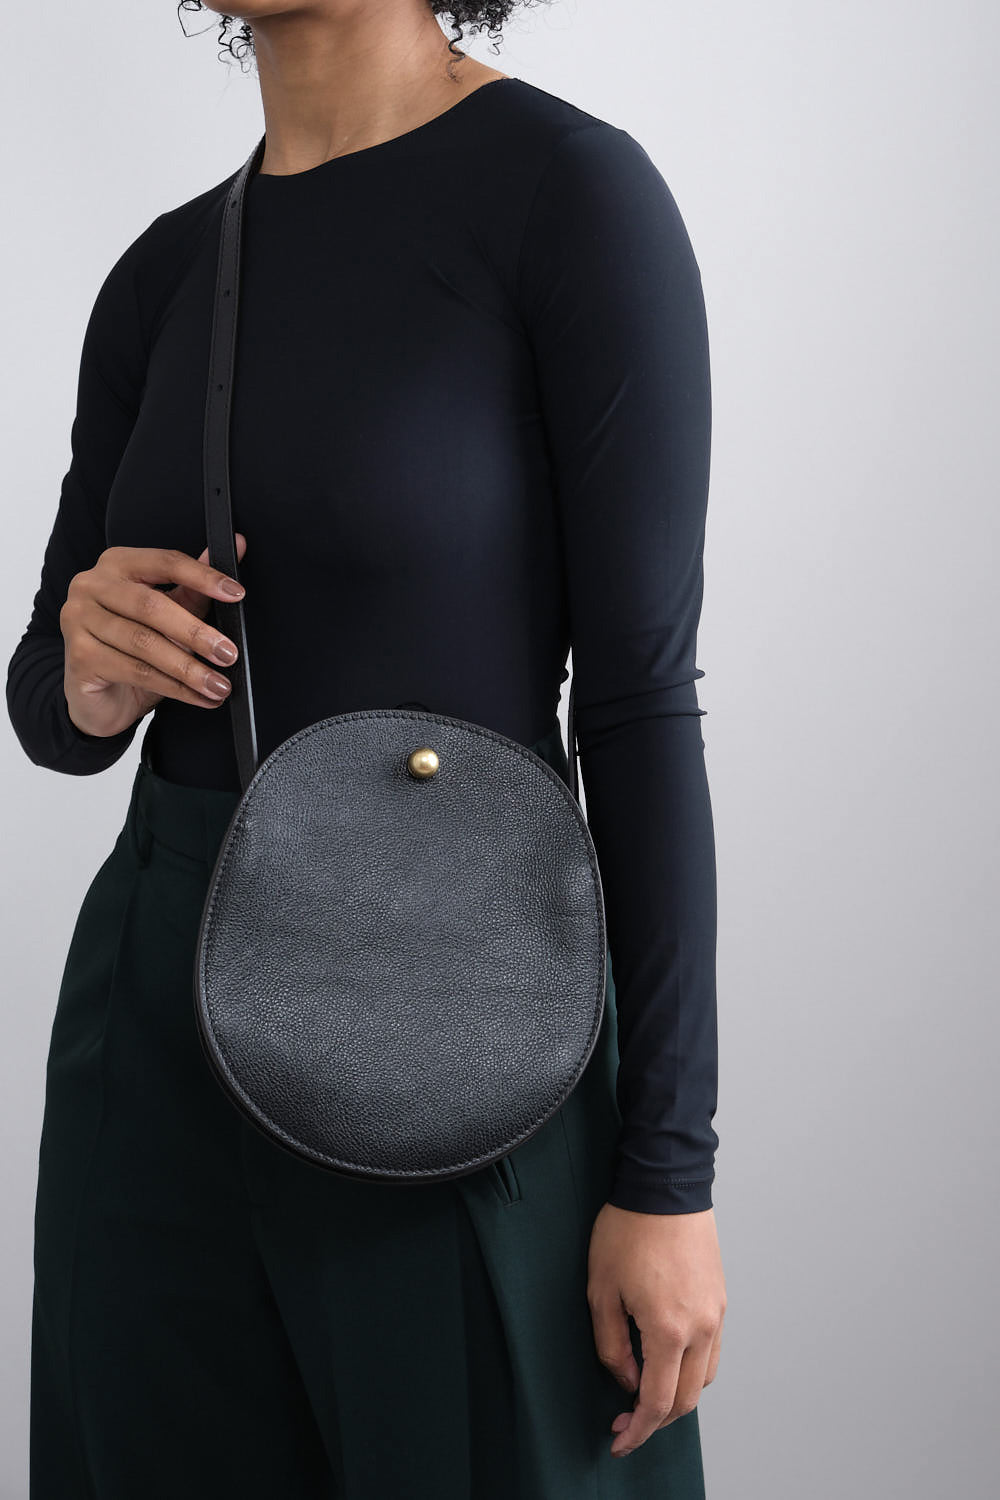 Giulia  Women's Clutch Bag in Leather color Blue Denim – Il Bisonte